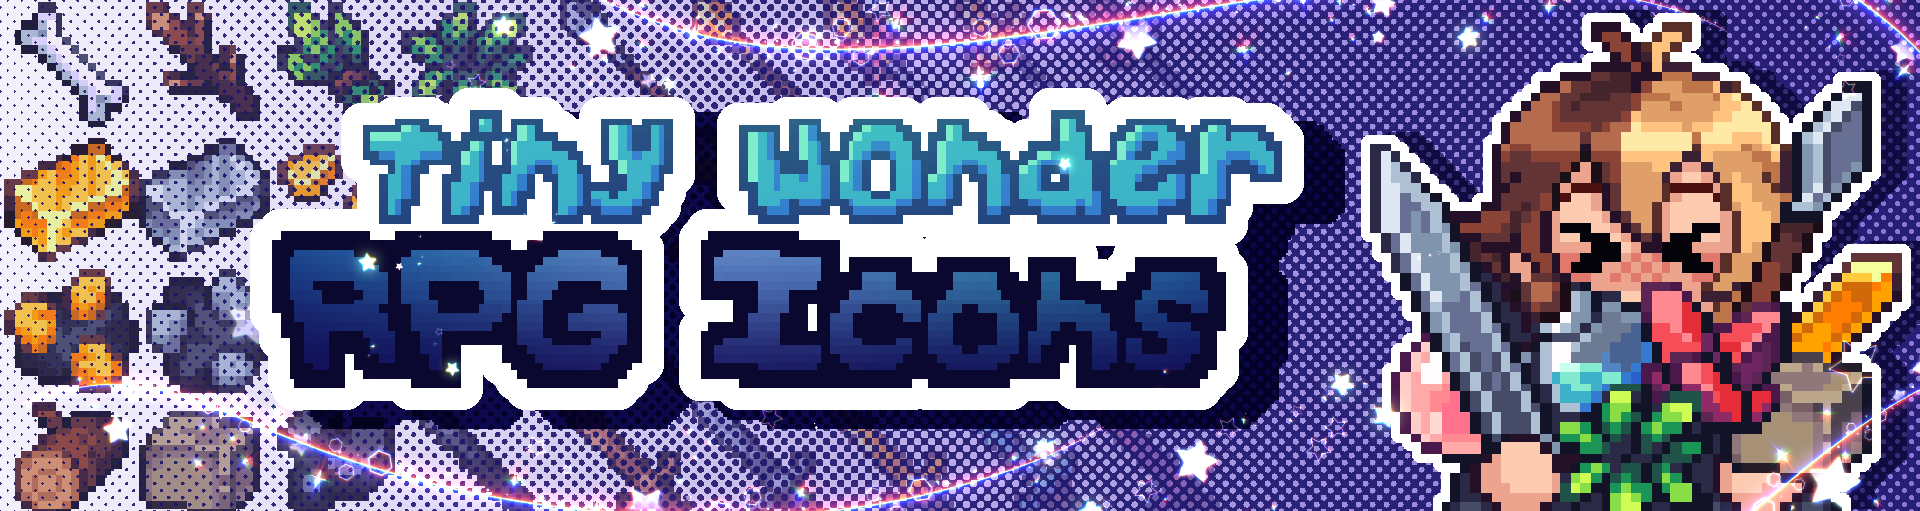 Tiny Wonder RPG Icon Pack